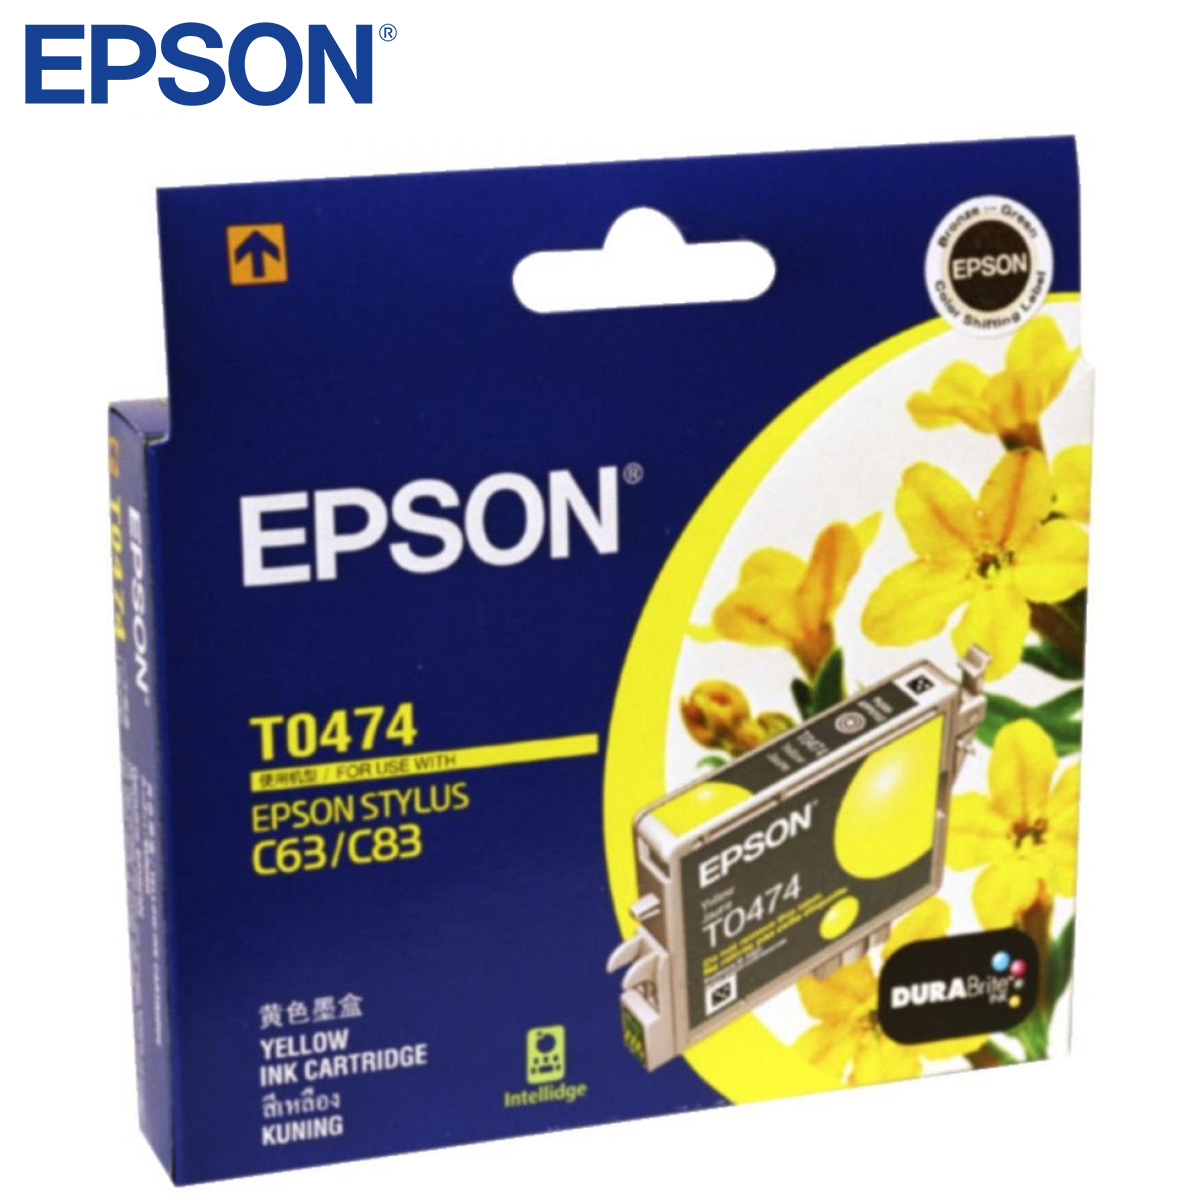 Epson Ink T0474 Yellow (Original)